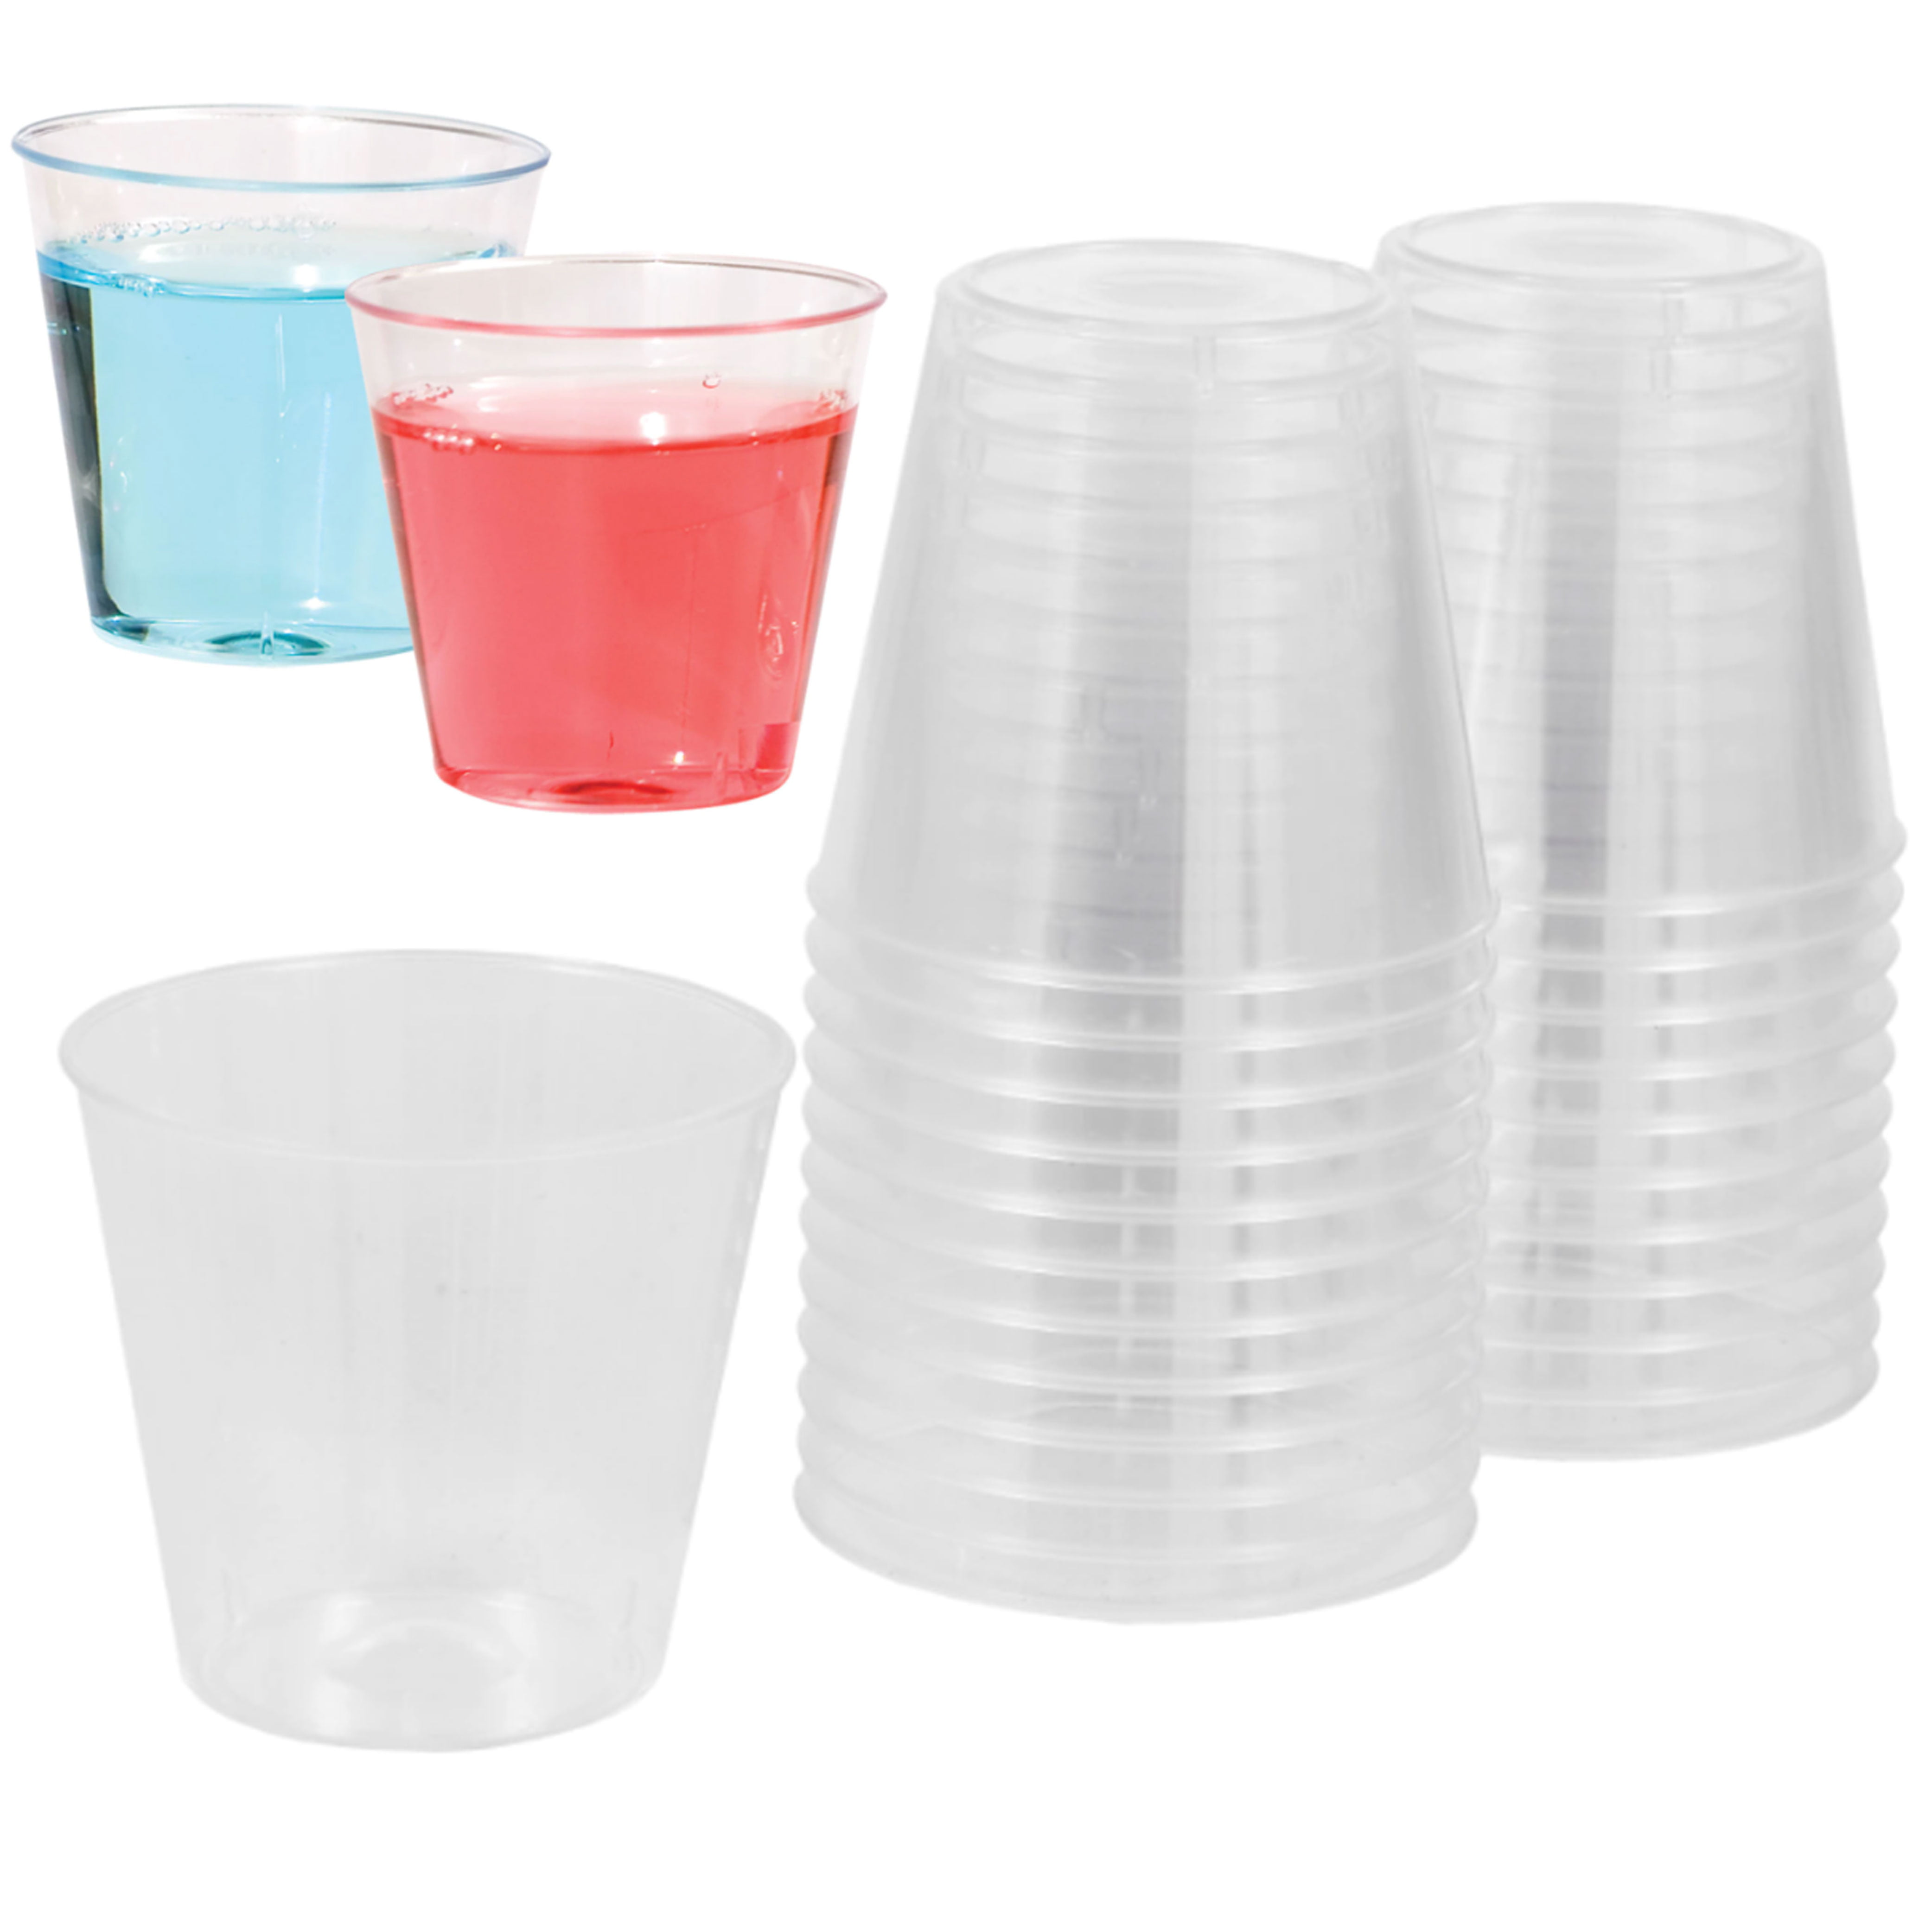 1 oz Disposable CLEAR PLASTIC Shot GLASSES Party Wedding TABLEWARE SALE 